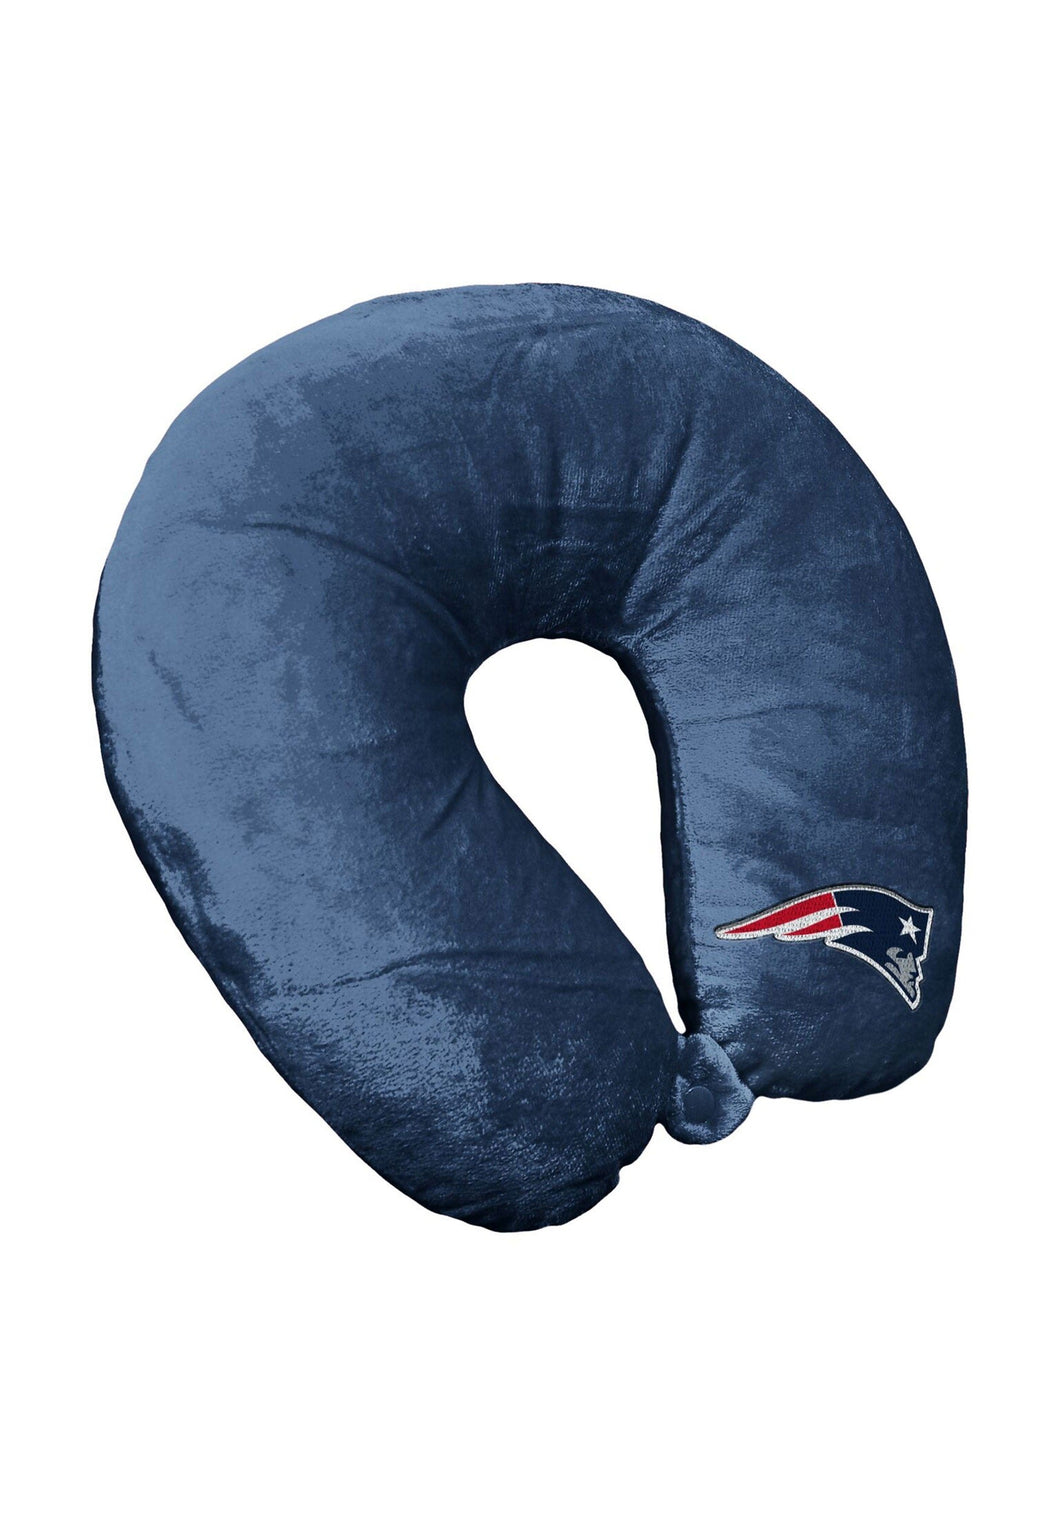 New England Patriots Travel Neck Pillow